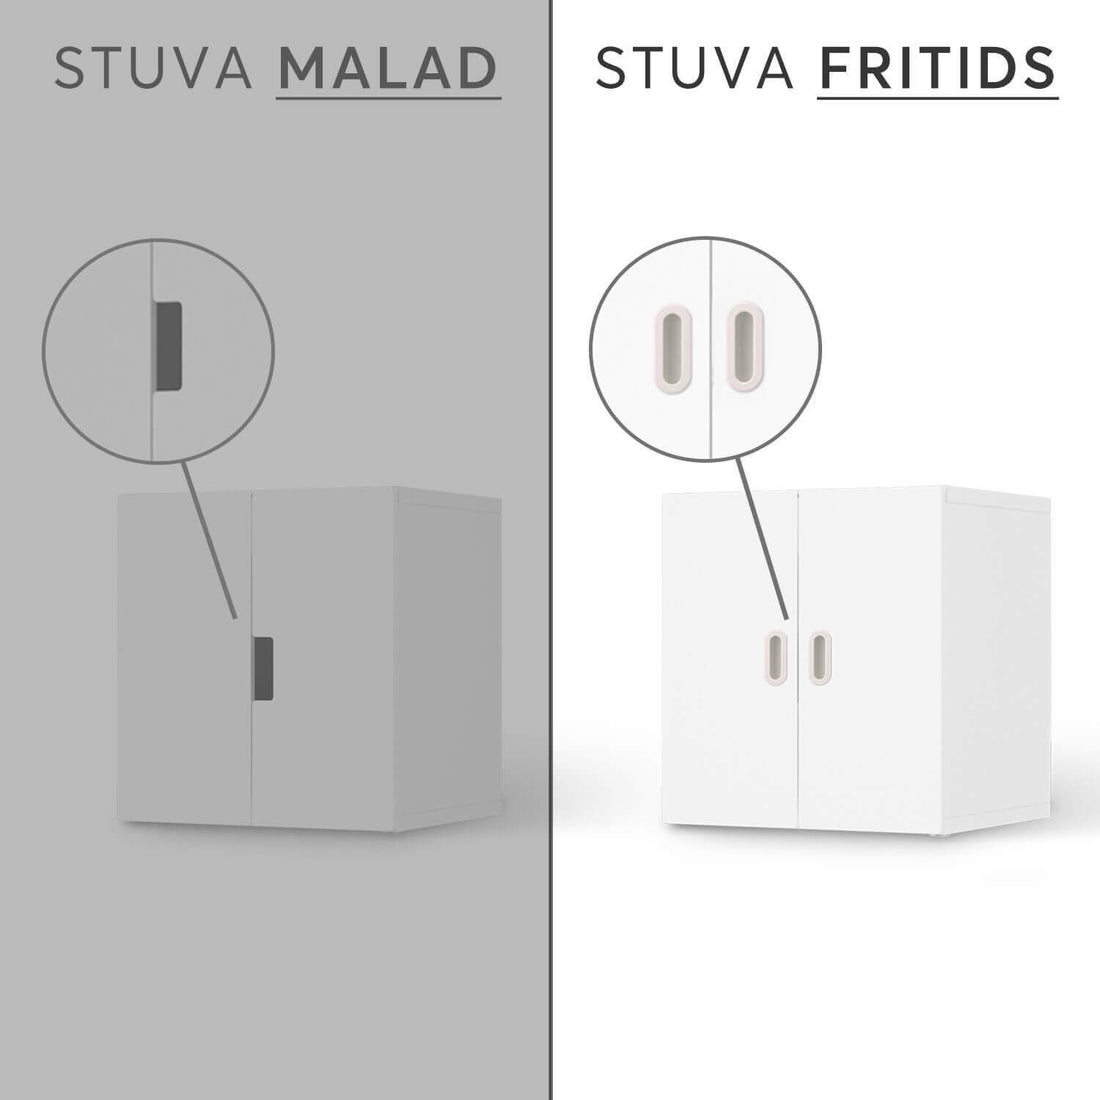 Vergleich IKEA Stuva Fritids / Malad - Fuchs